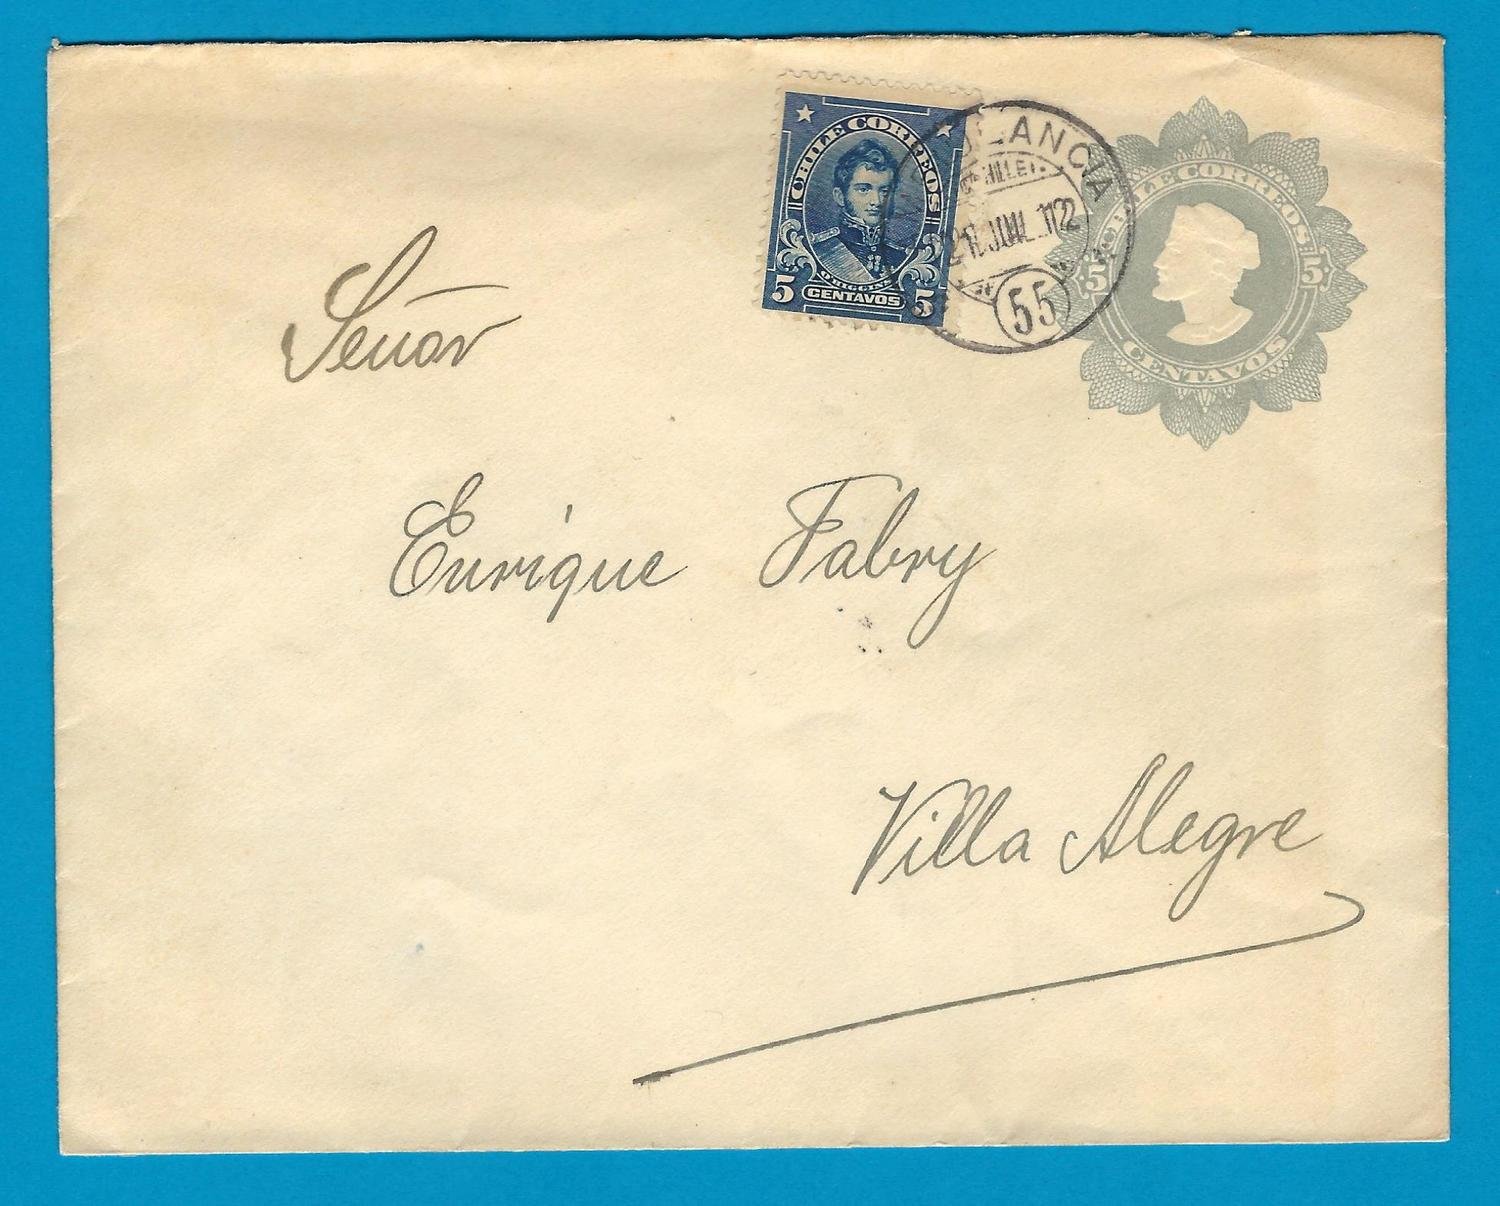 CHILE uprated postal envelope 1912 with Ambulancia 55 to Villa Alegre